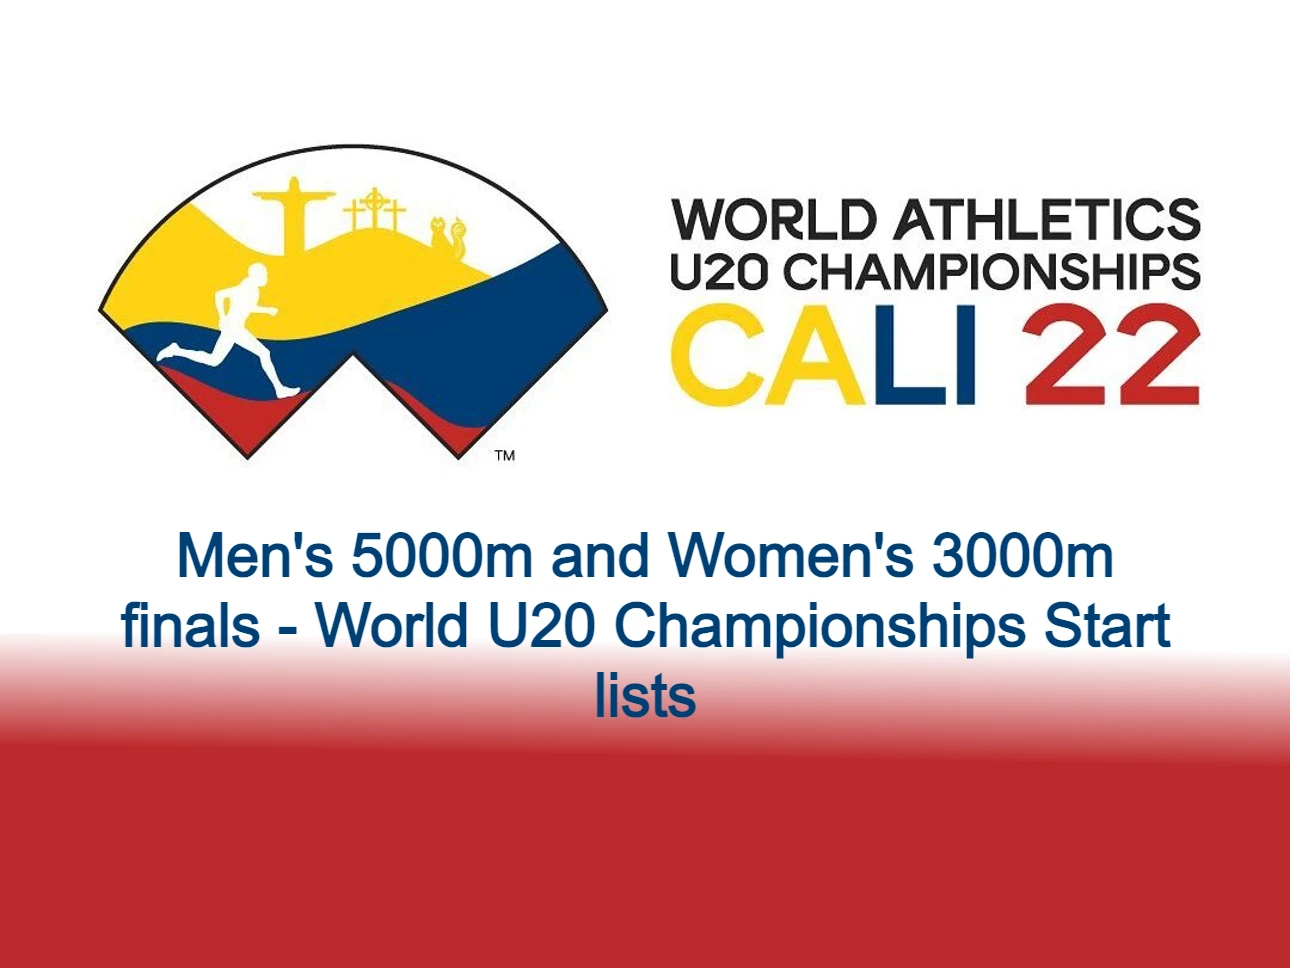 Preview – World Athletics U20 Championships women’s 3000m and men’s 5000m finals